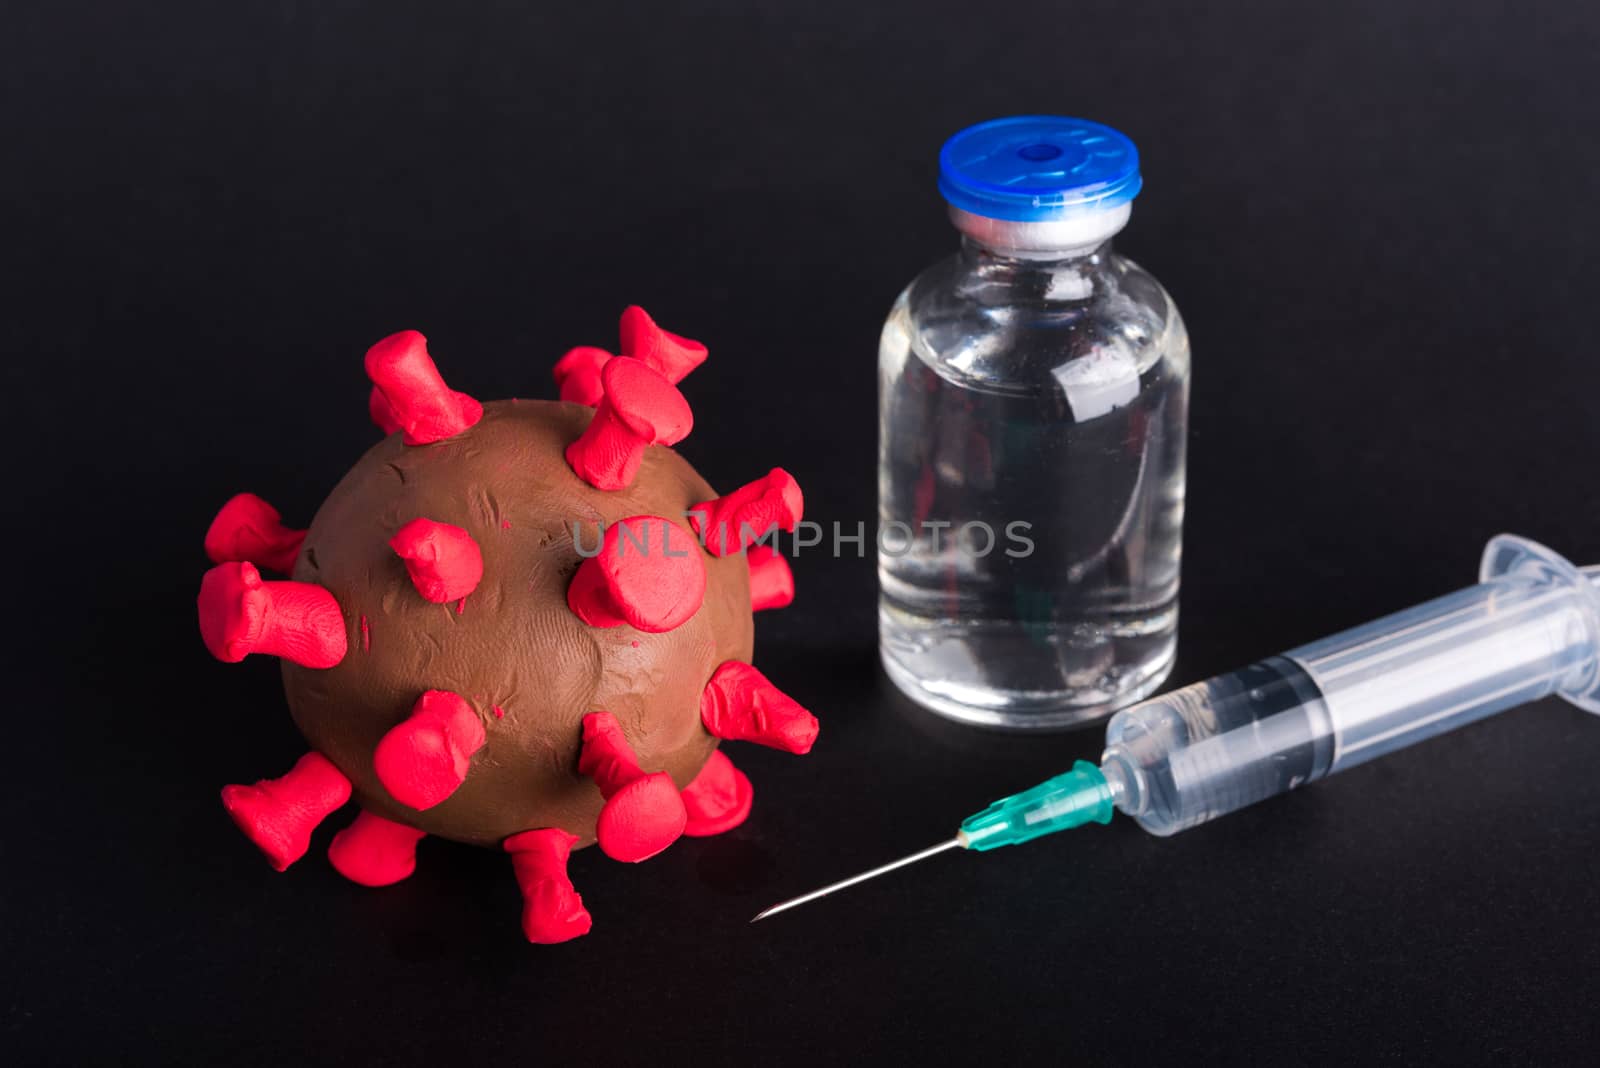 plasticine disease cells virus bottle vaccine and syringe by Sorapop